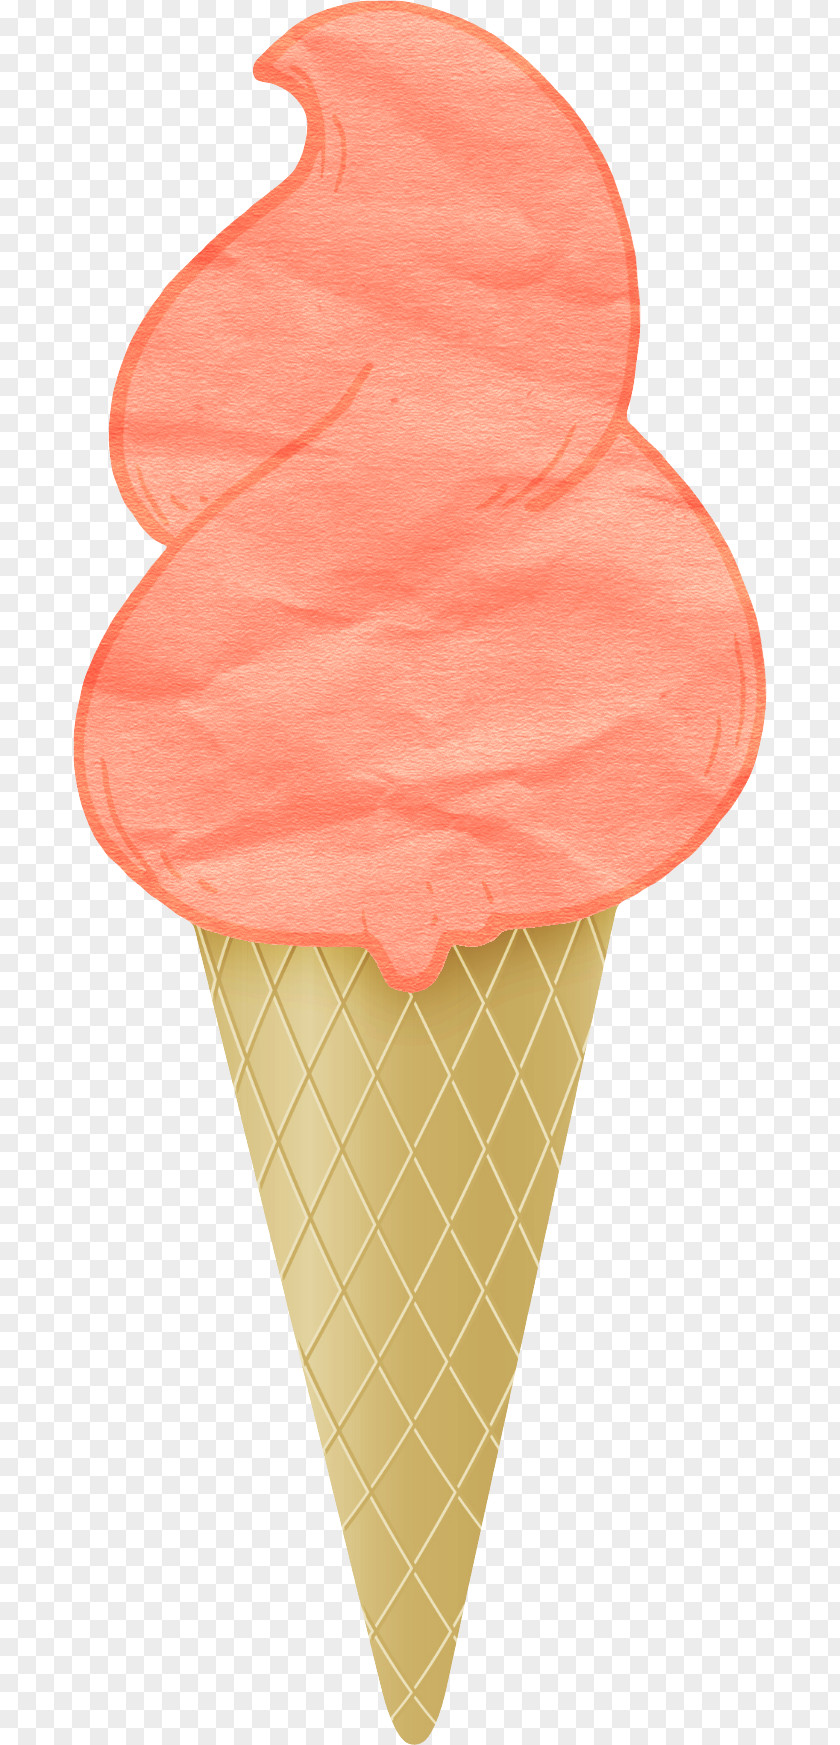 Orange Cartoon Ice Cream Cone Gelato Drawing PNG